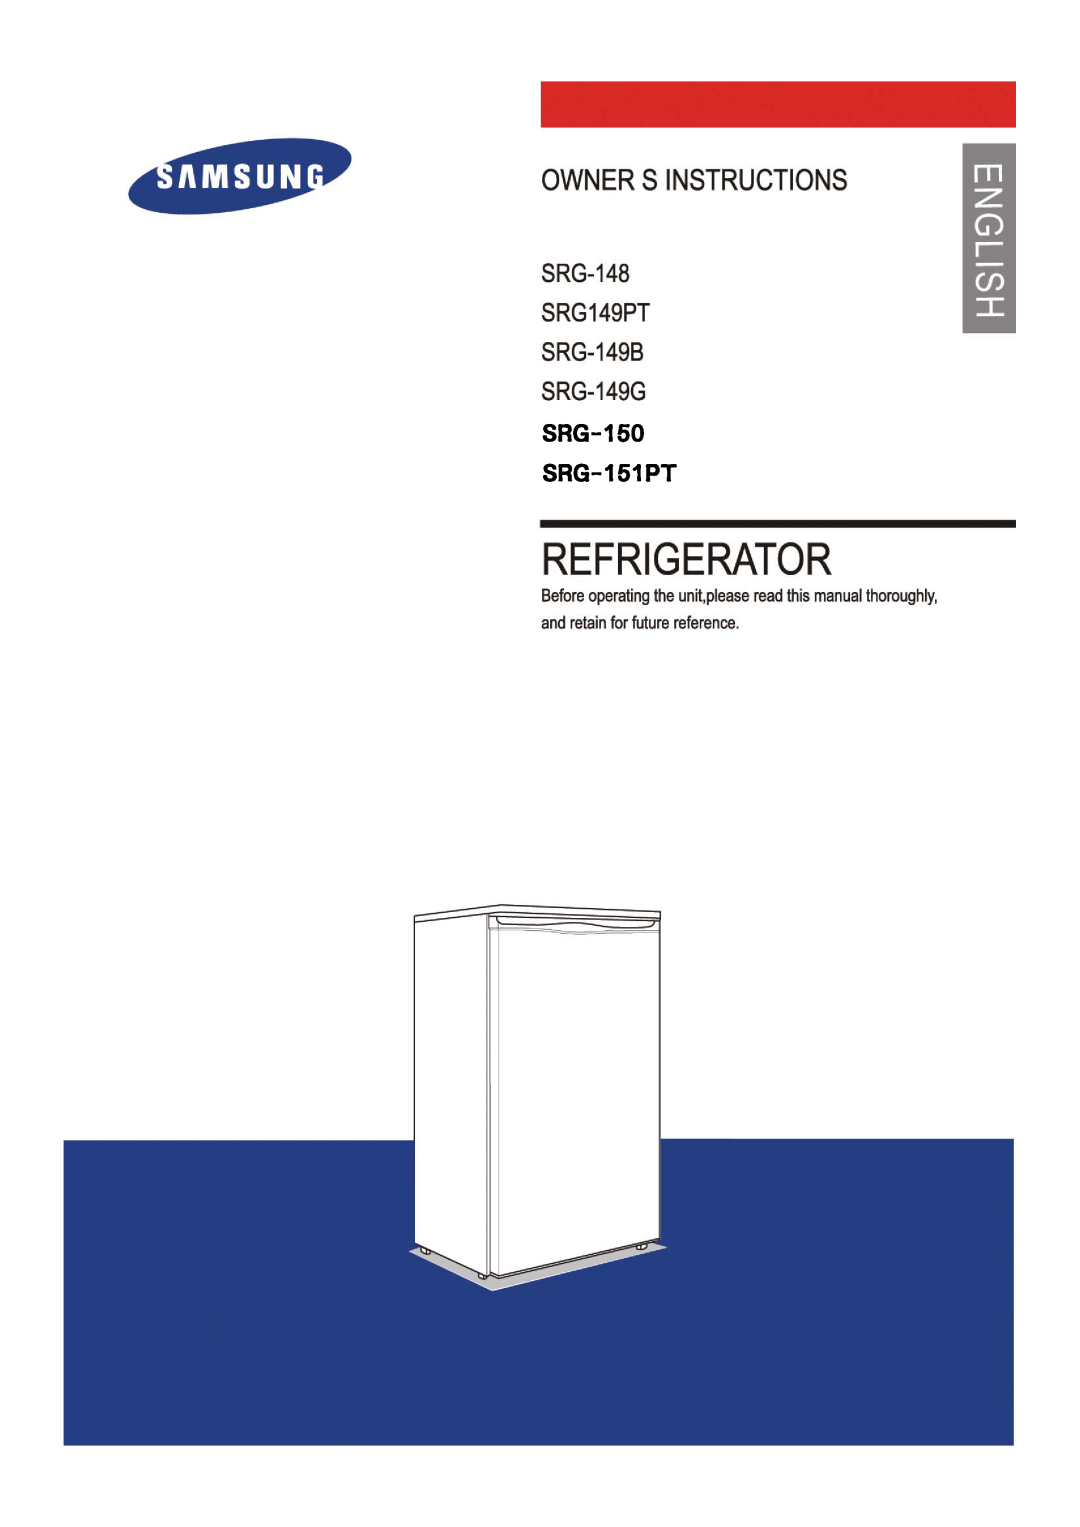 Samsung SRG-151PT, SRG-150, SRG-149PT manual 